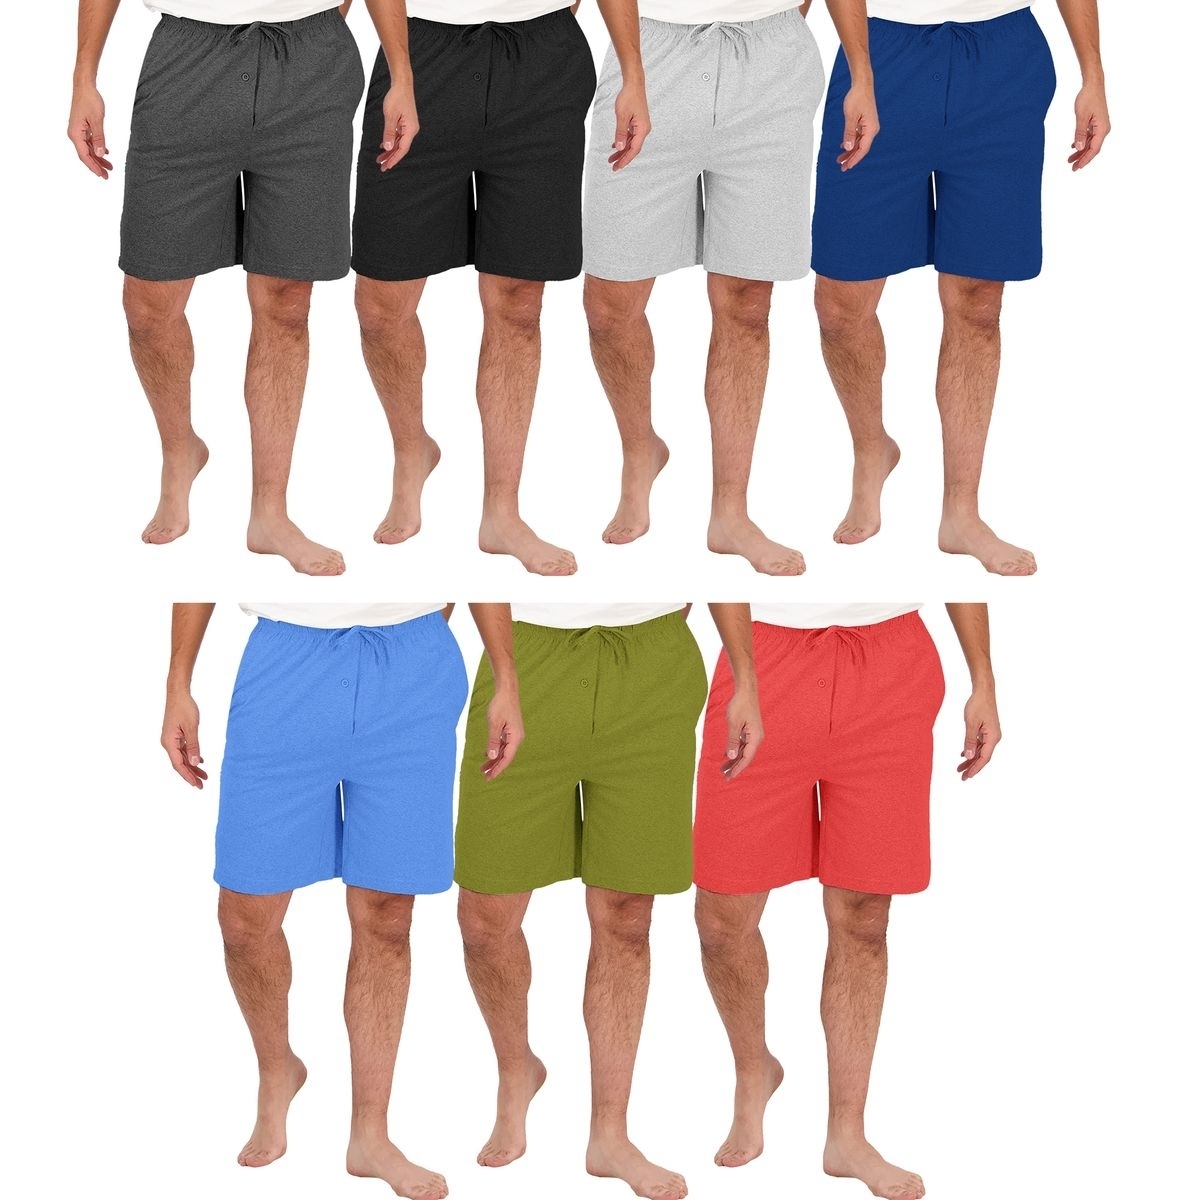 Men's Ultra-Soft Jersey Knit Lounge Sleep Pajama Shorts - Grey, Small